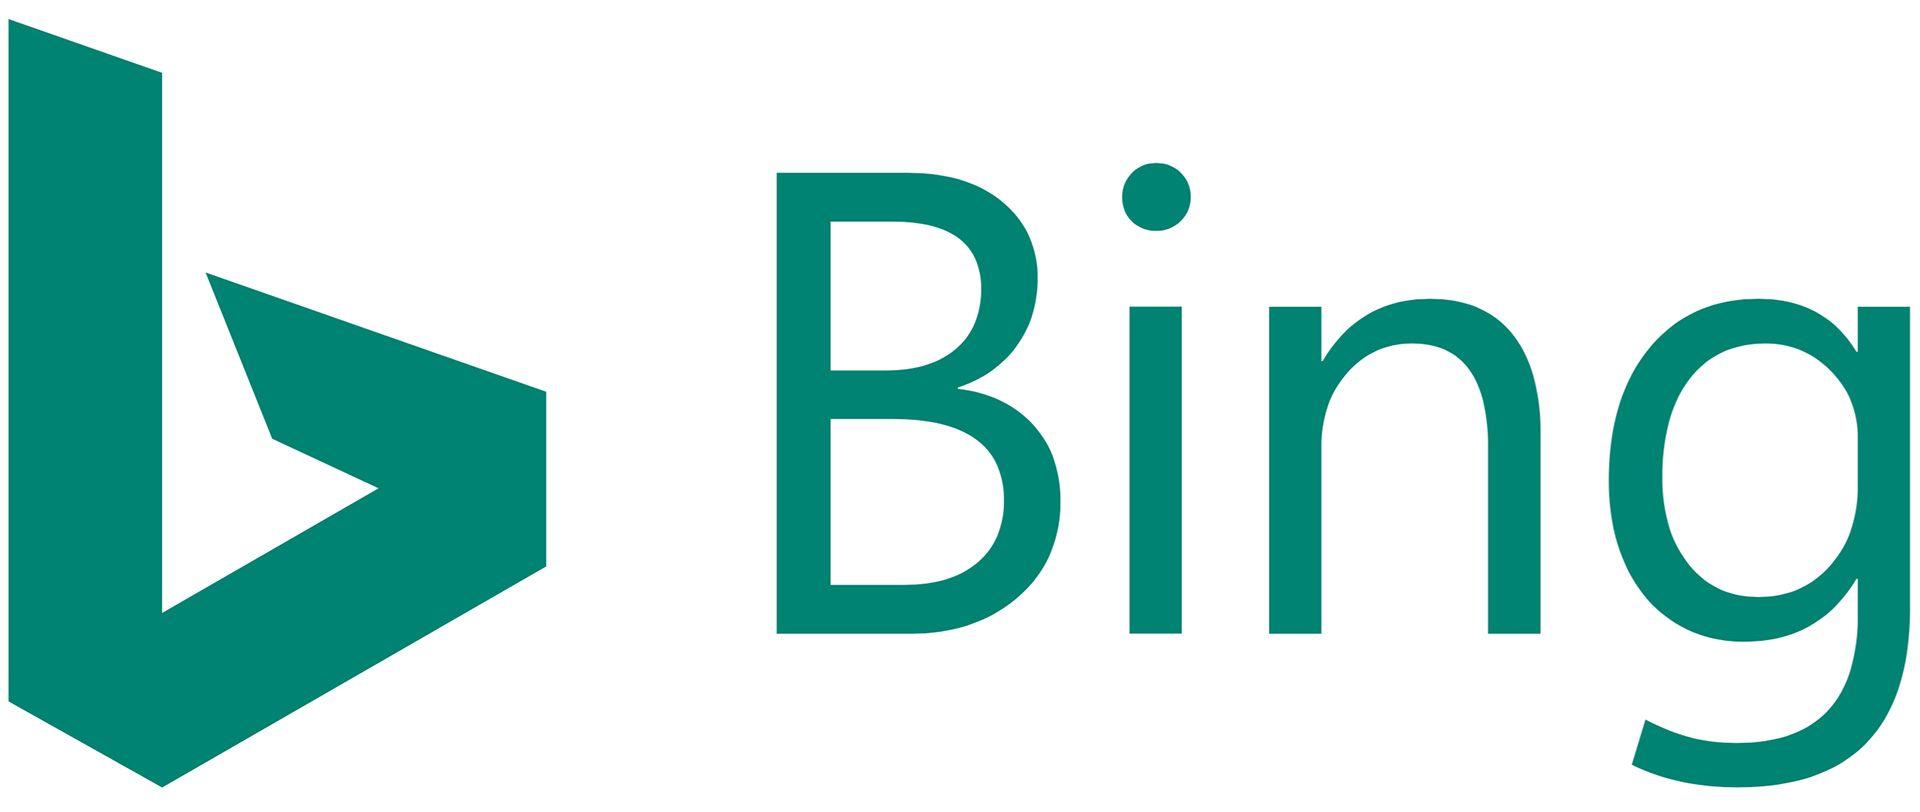 Bing Teal Logo - Bing To Use Location for RTBF | Bing Search Blog